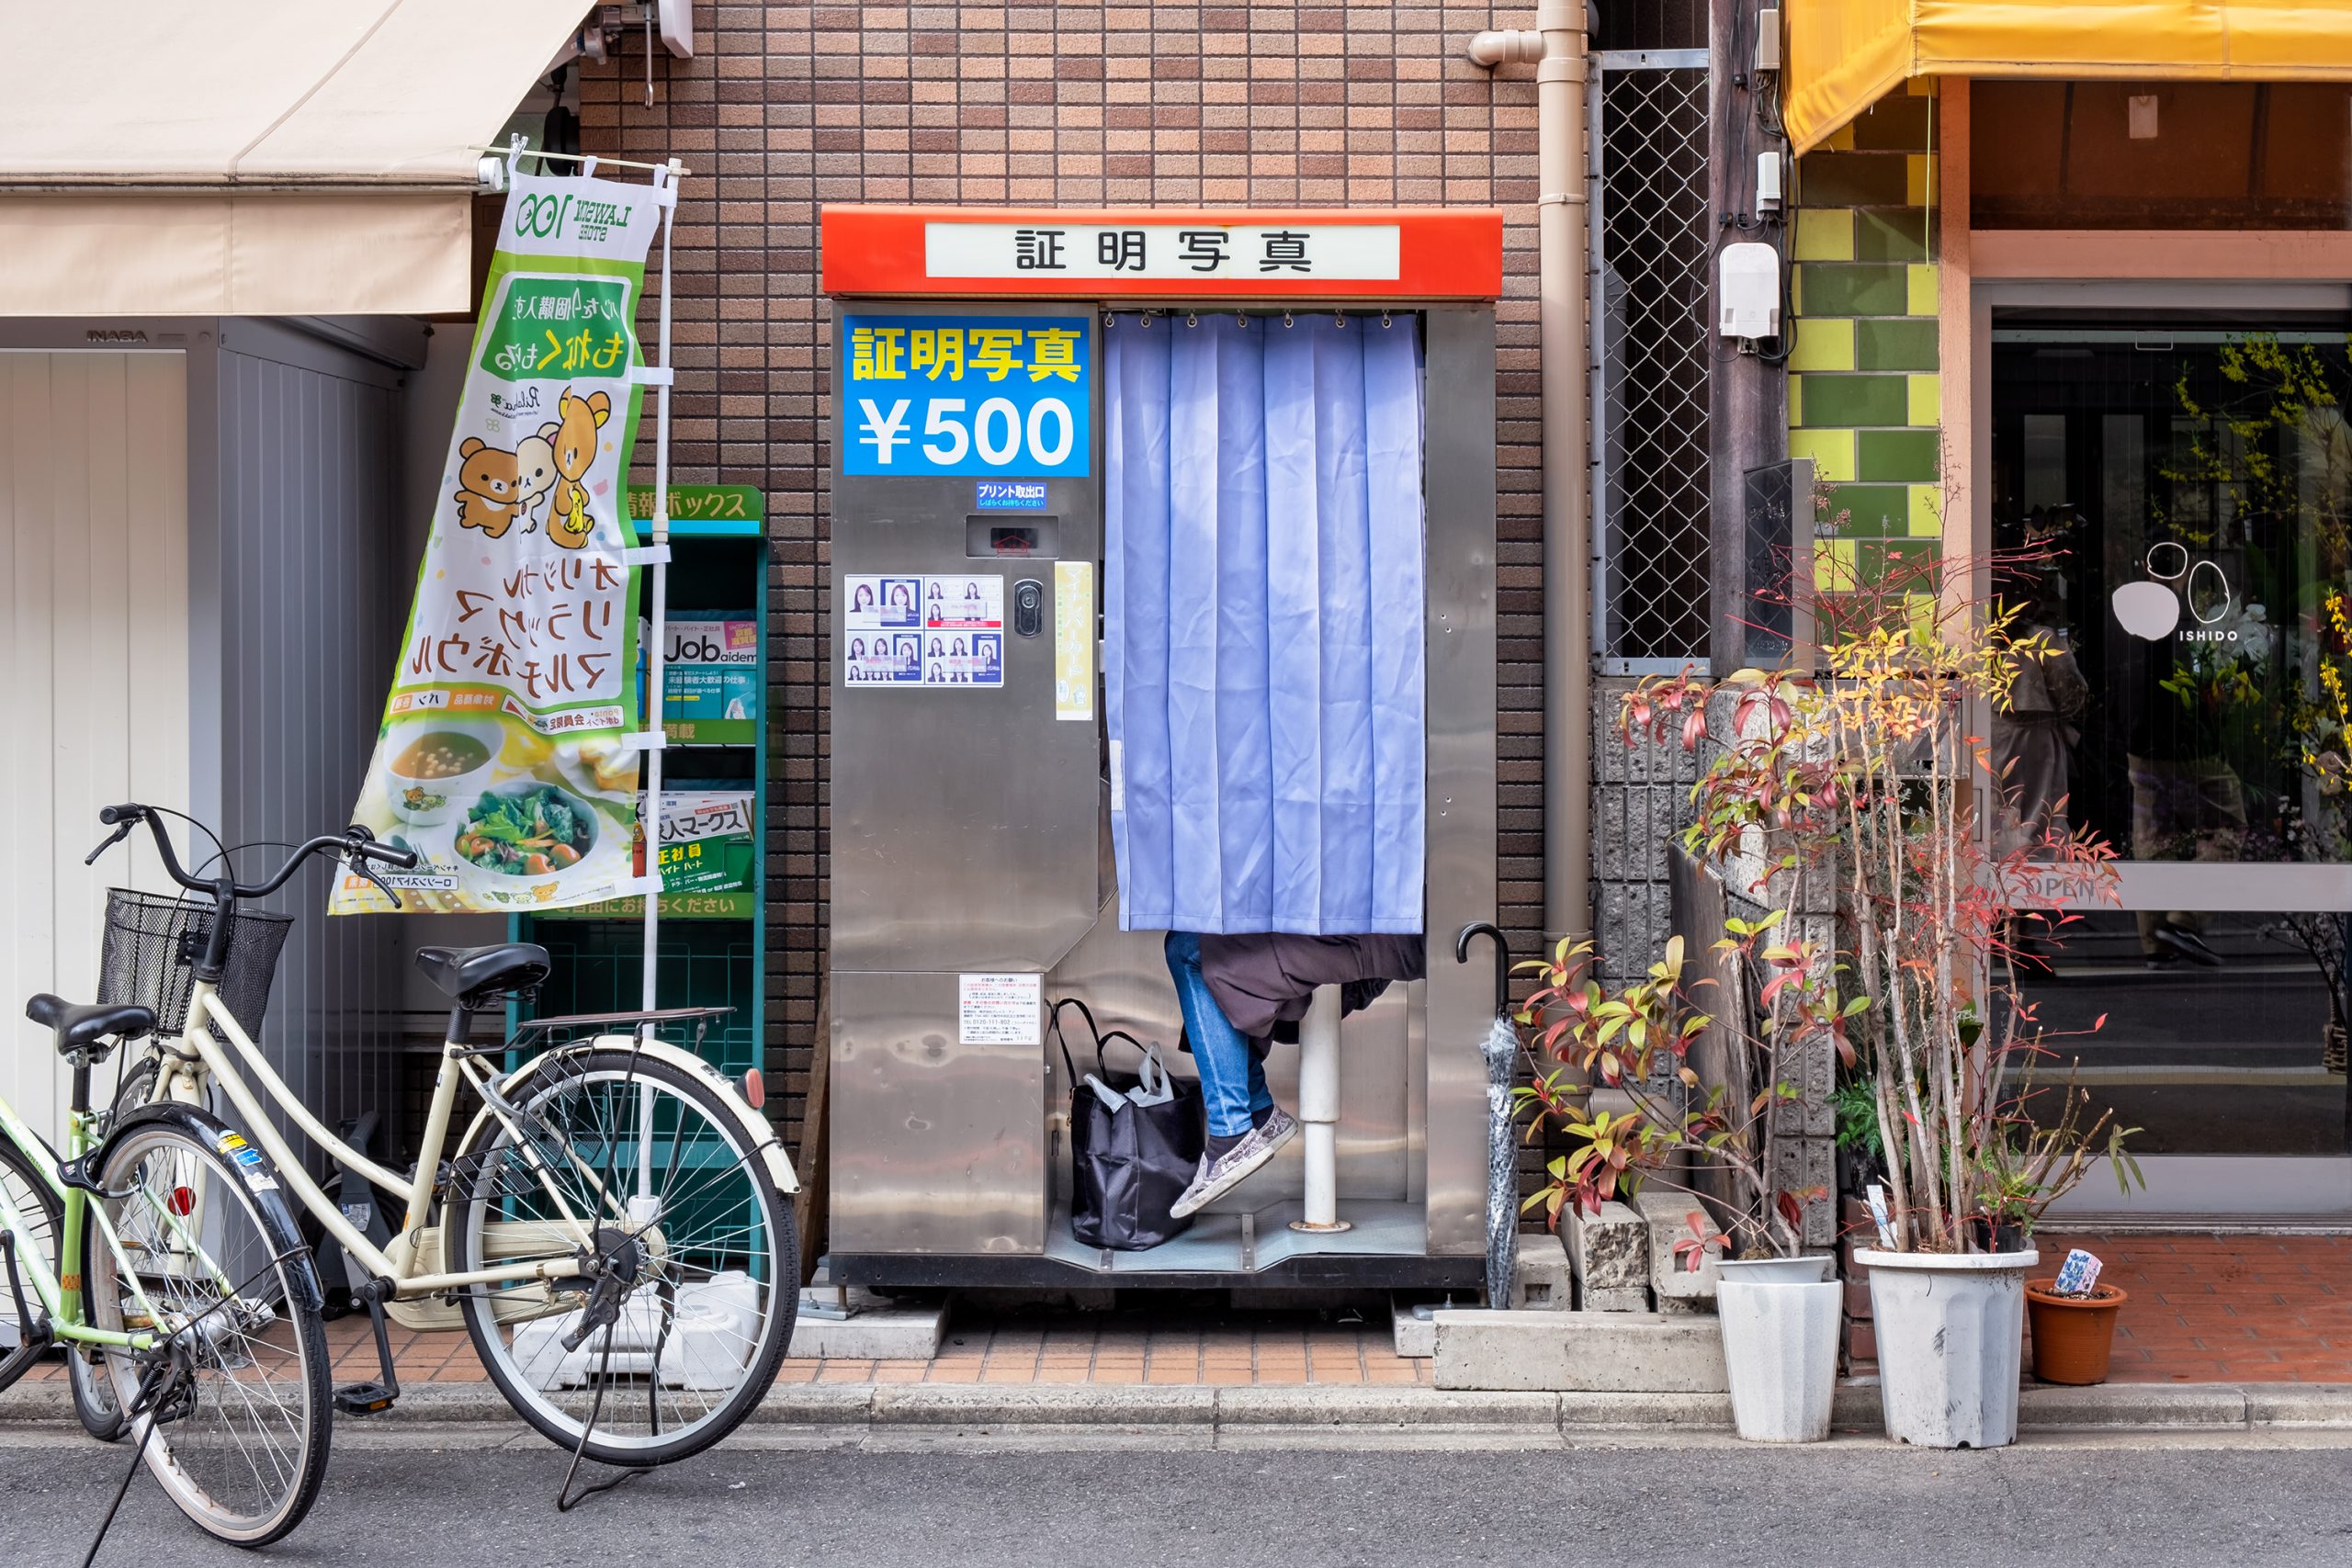 ©Doug Caplan. Japanese Vending Machines